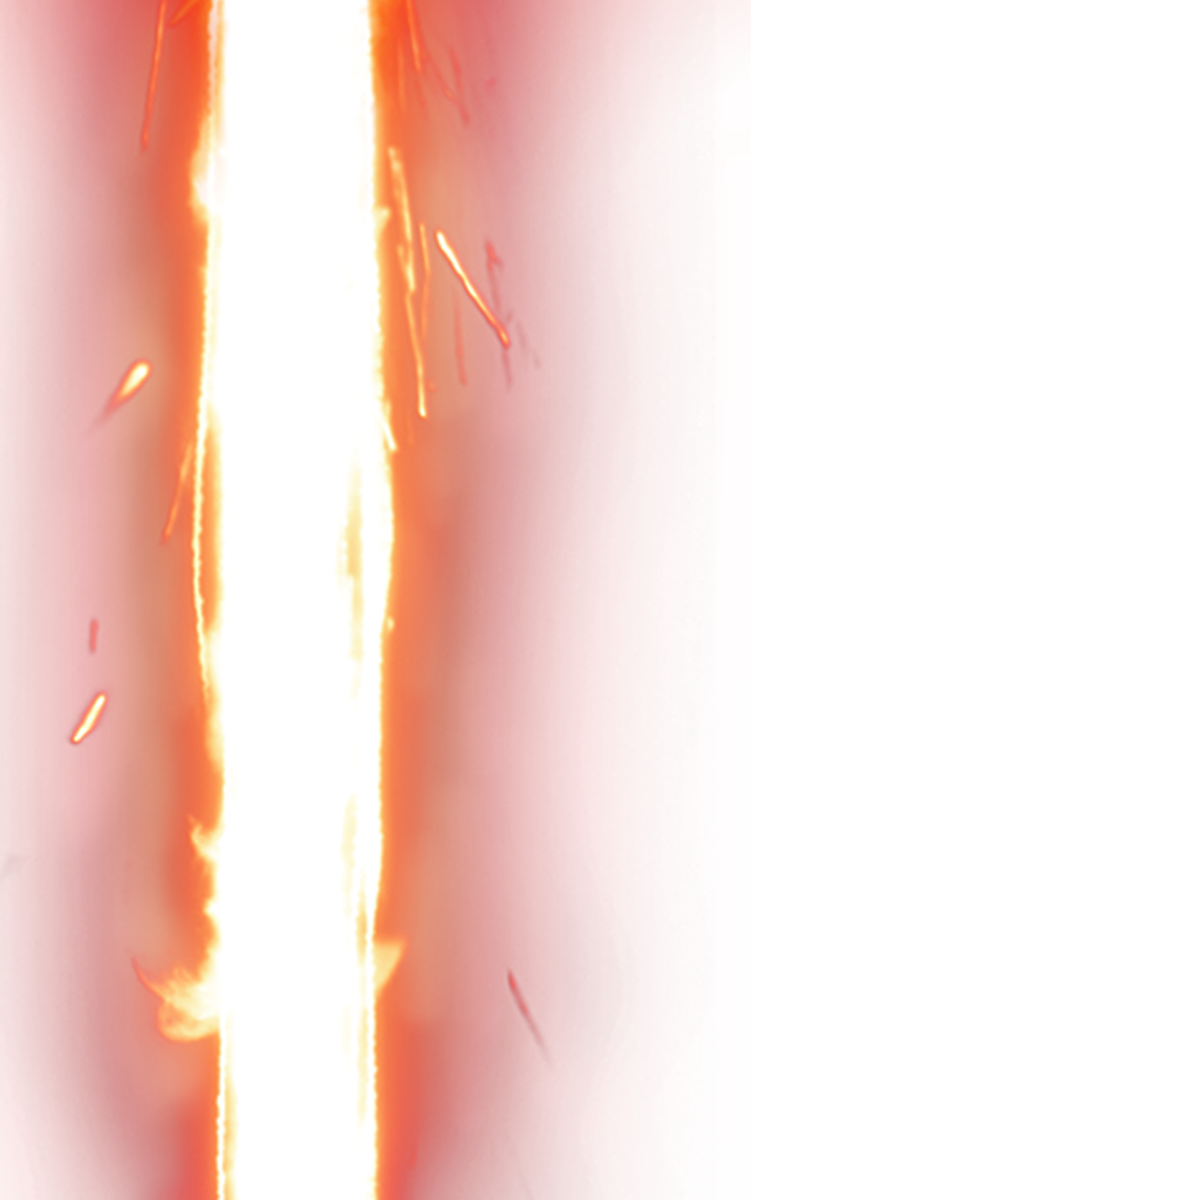 Unofficial Star Wars Red Lightsaber Filter